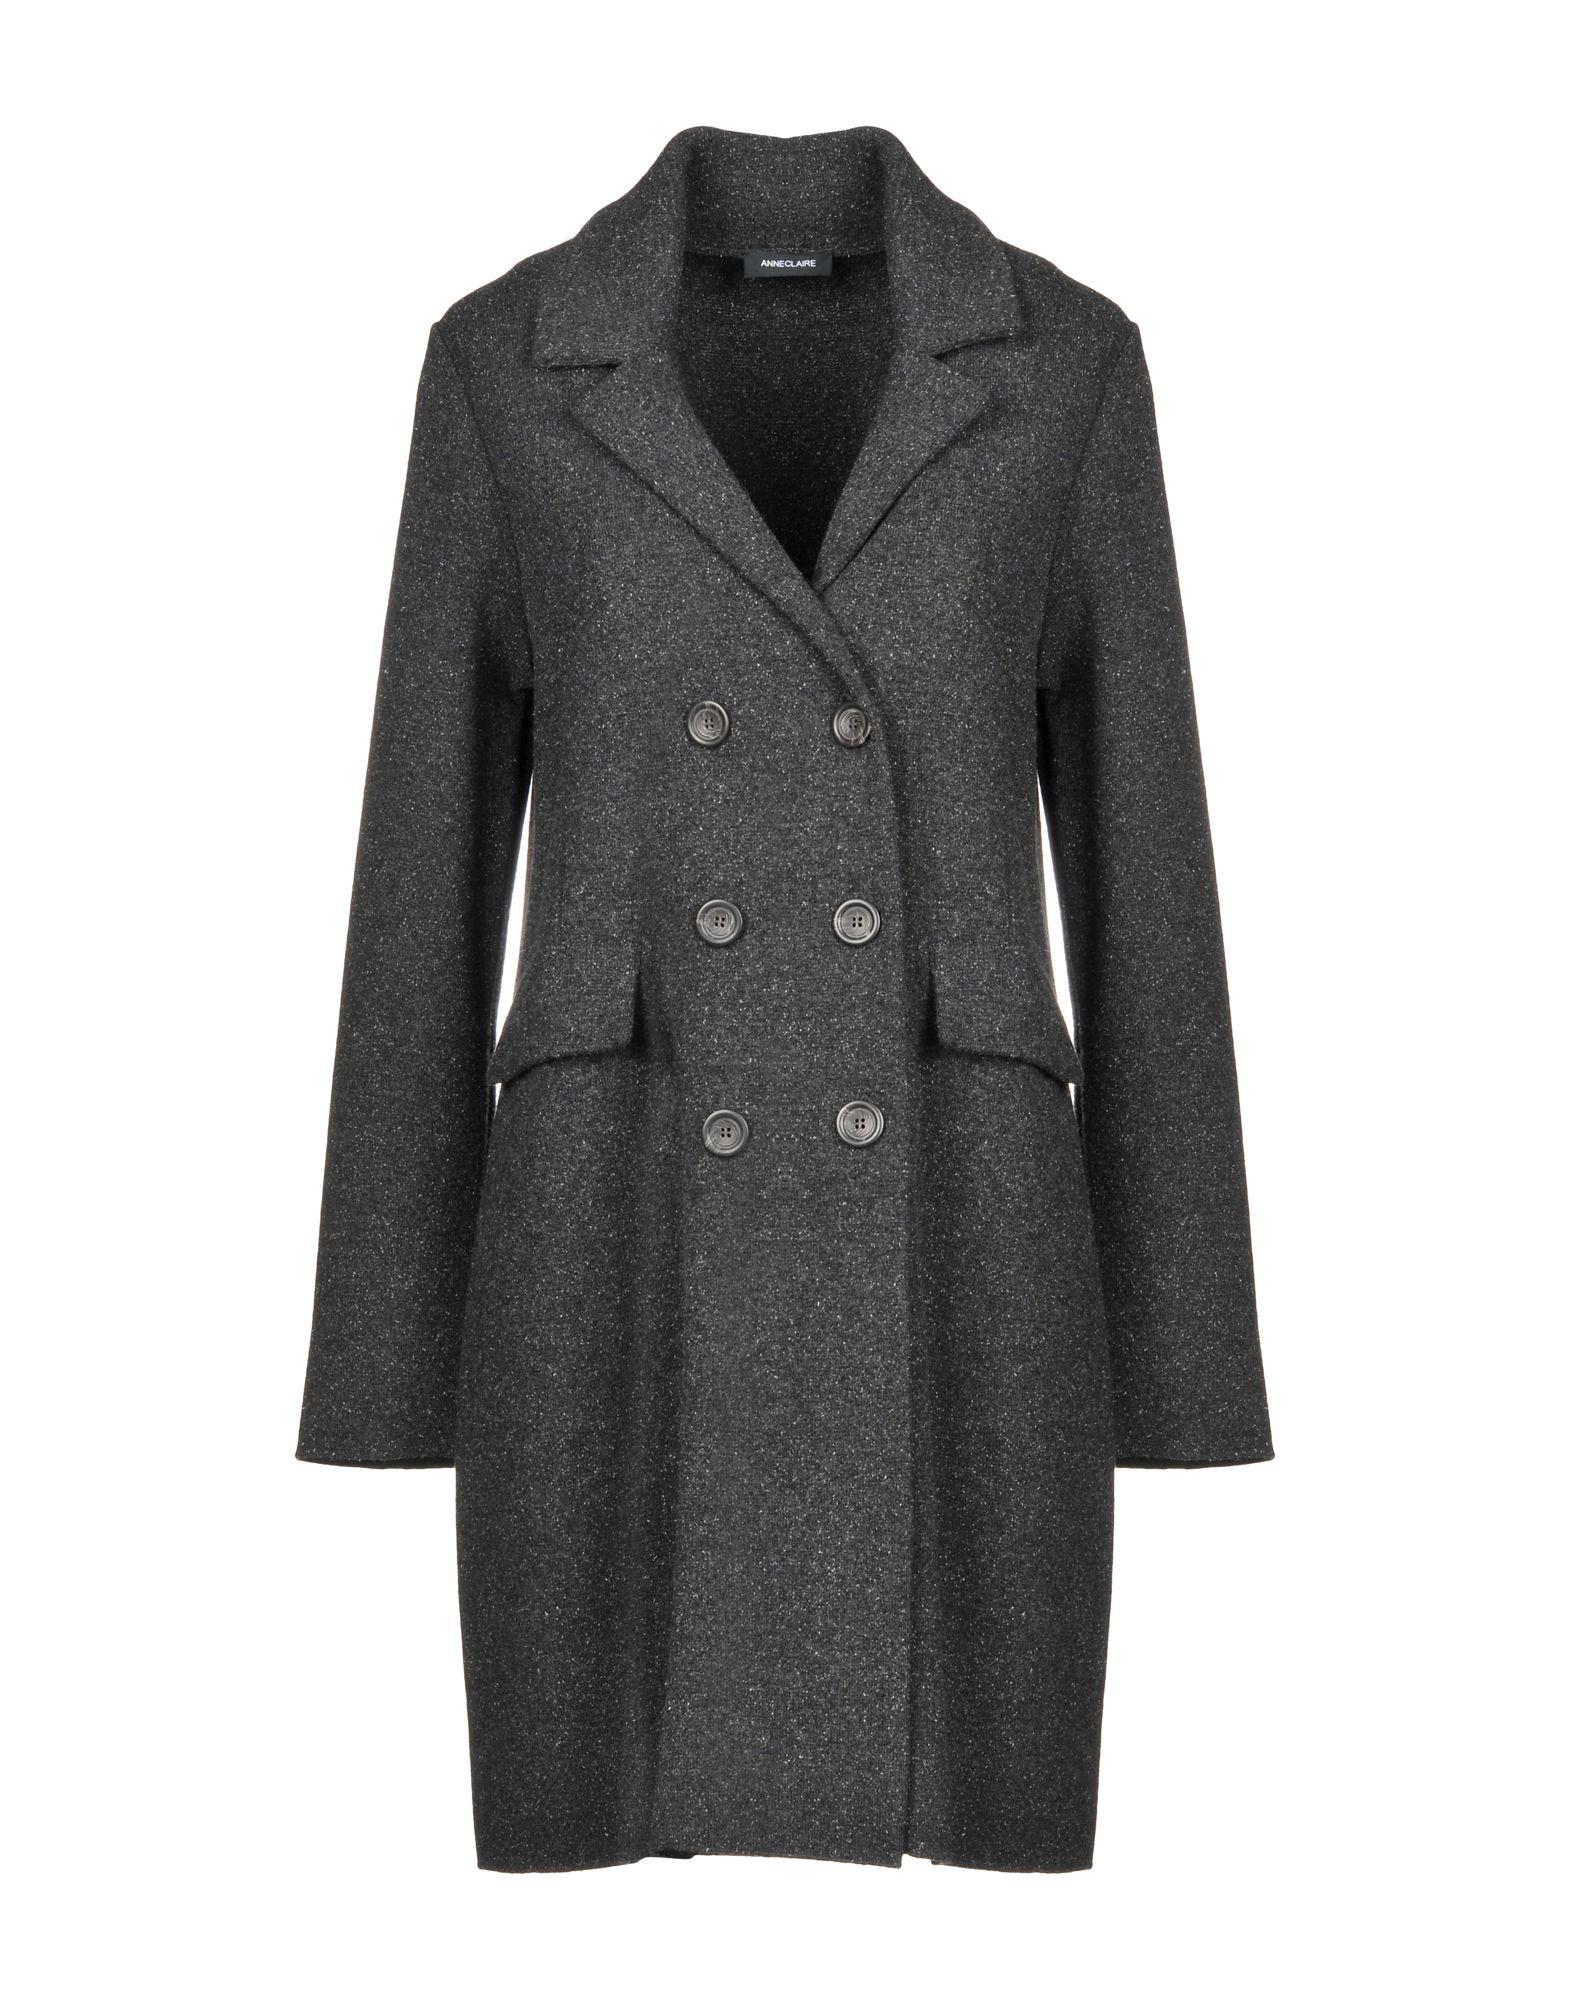 Anneclaire Wool Coat in Lead (Gray) - Lyst